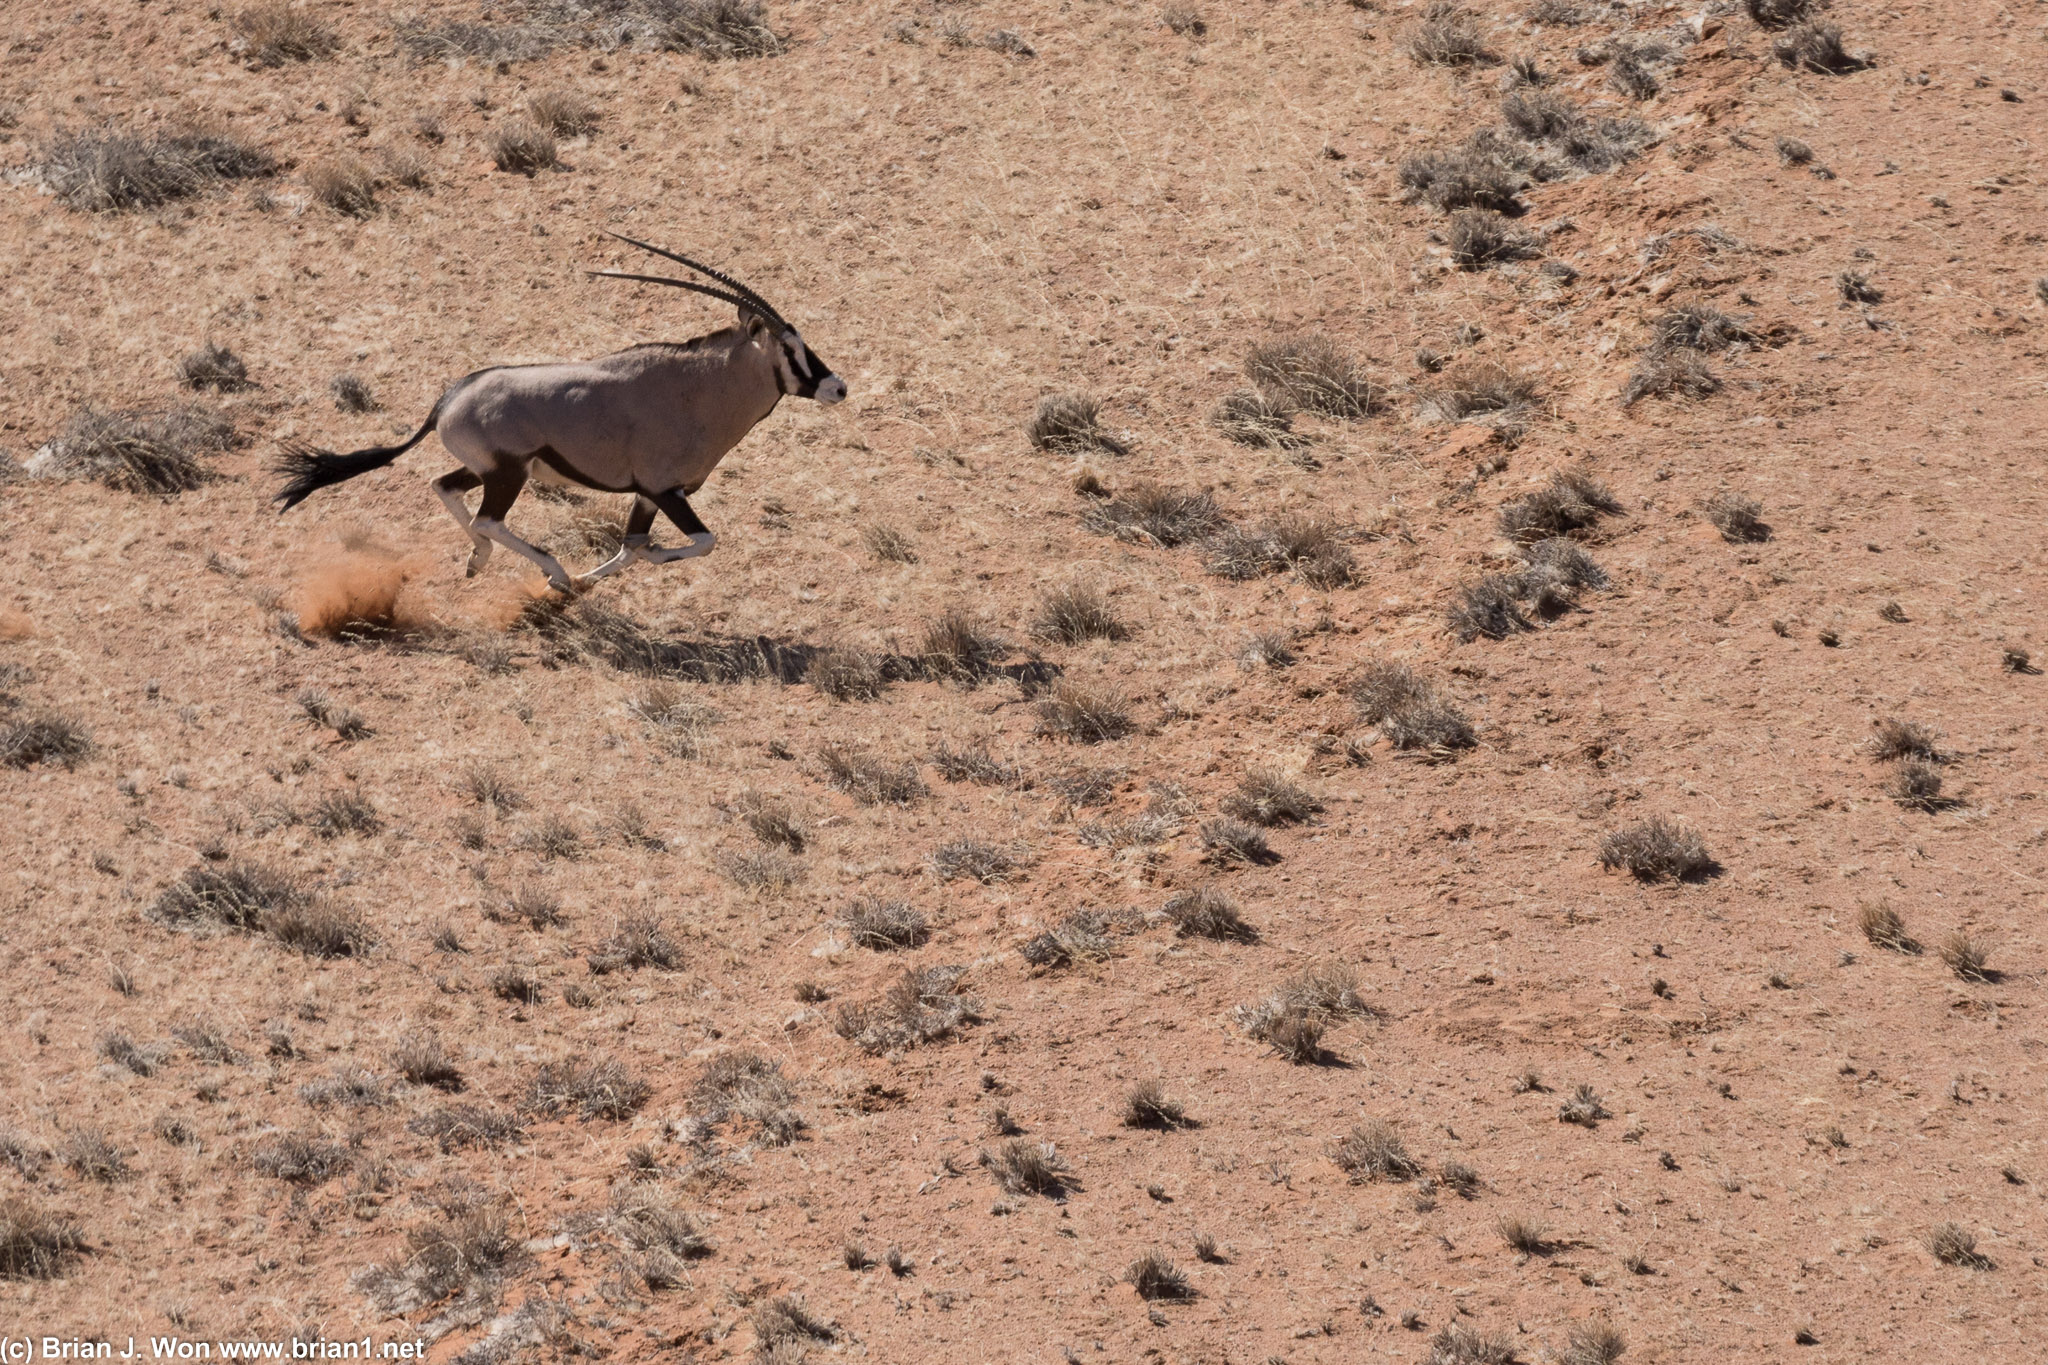 Oryx are impressive runners.